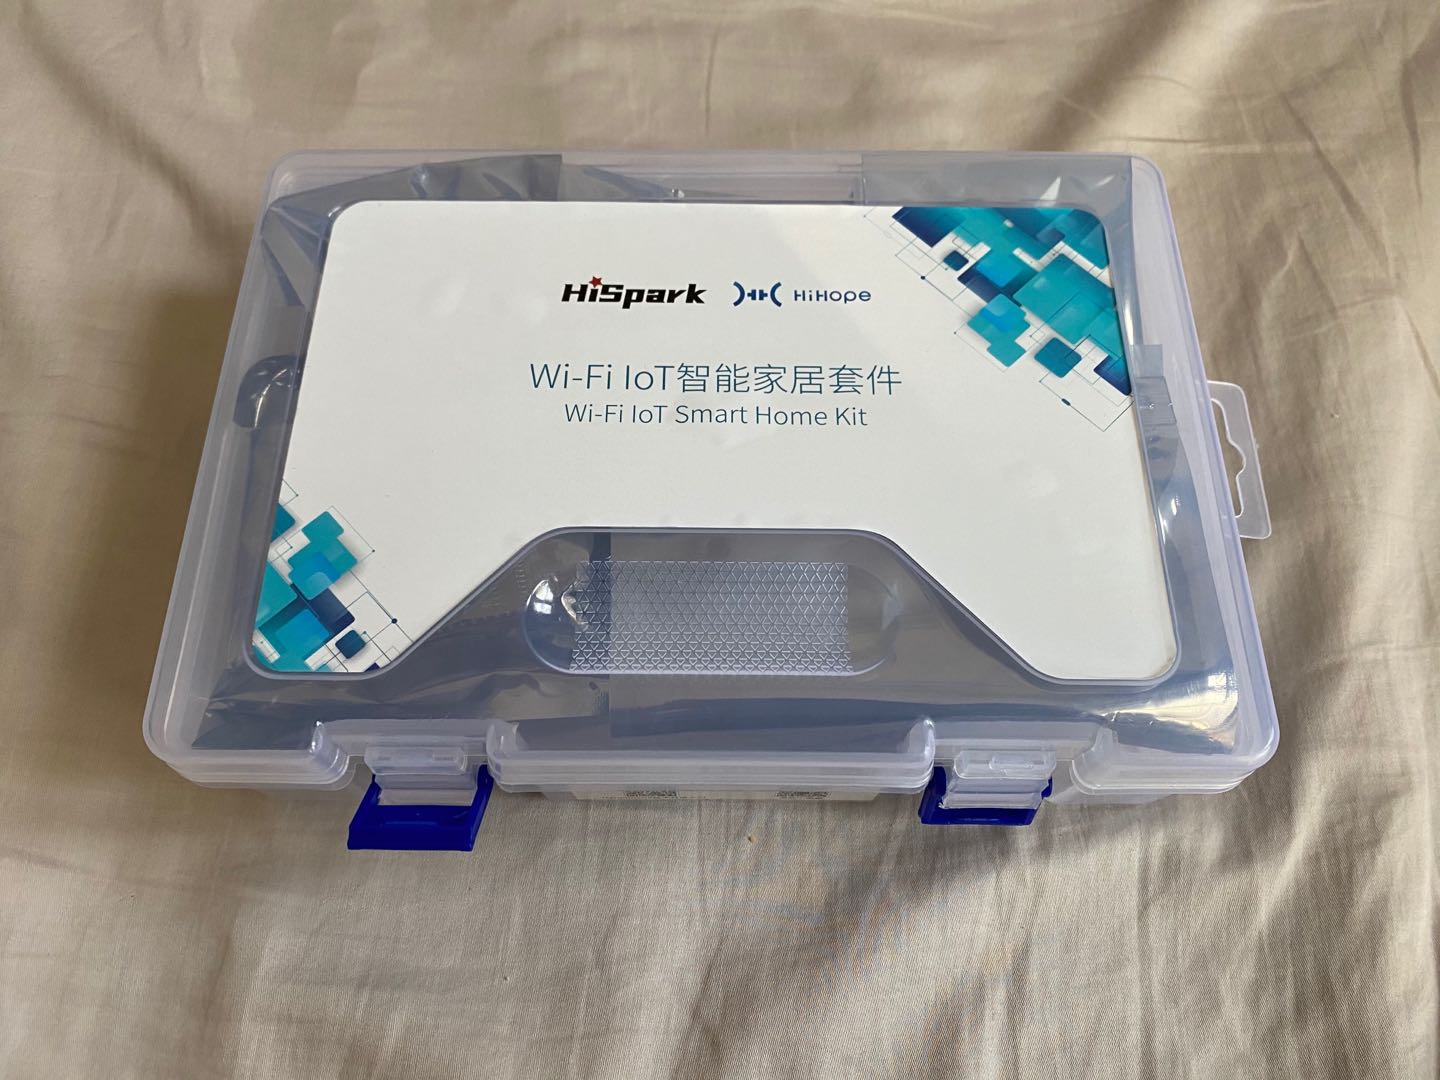 Wi-Fi IoT Hi3861套件开箱啦  -鸿蒙开发者社区